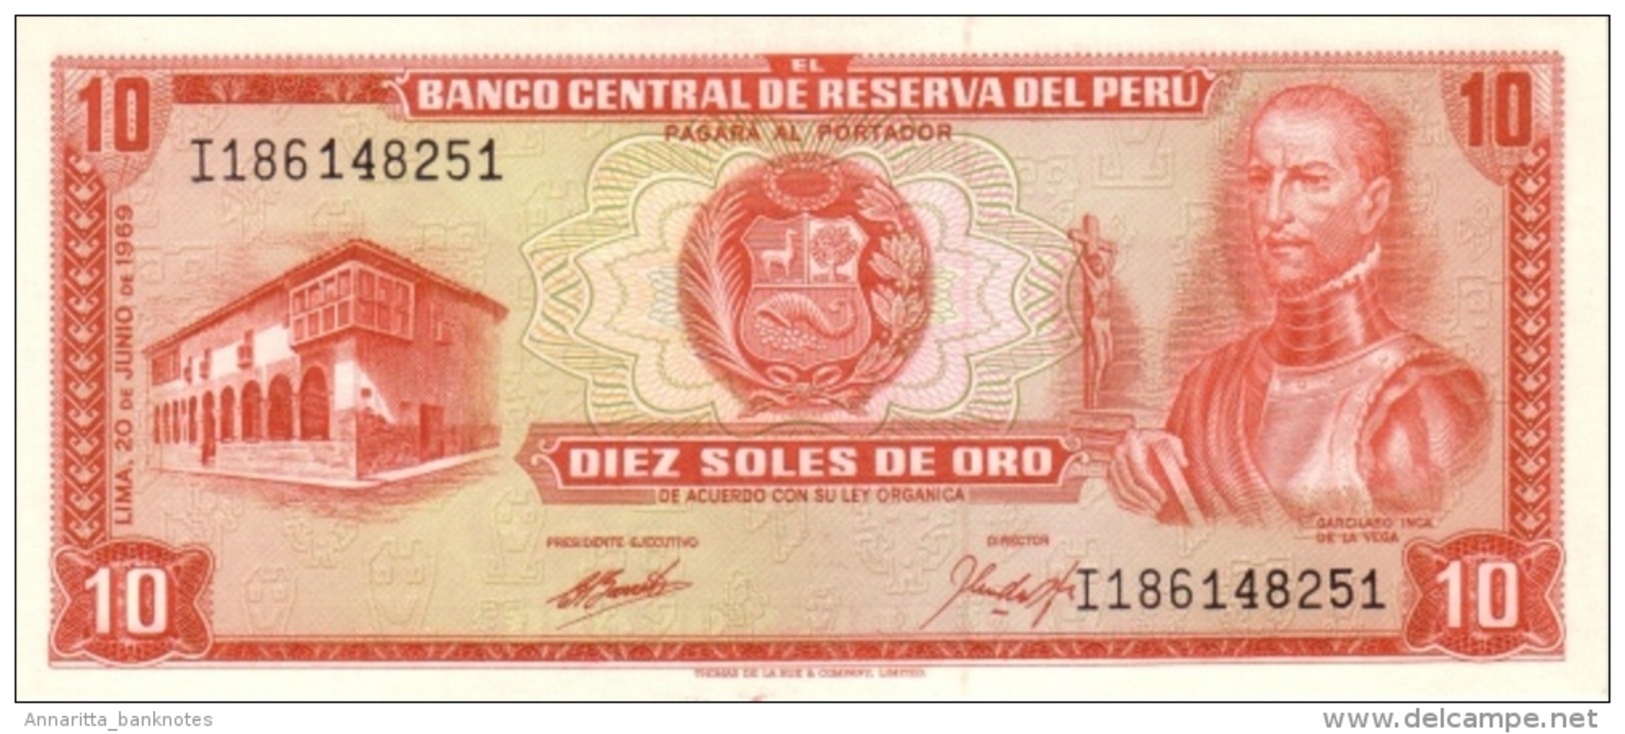 PERU 10 SOLES DE ORO 1969 P-100a UNC [PE100a] - Pérou